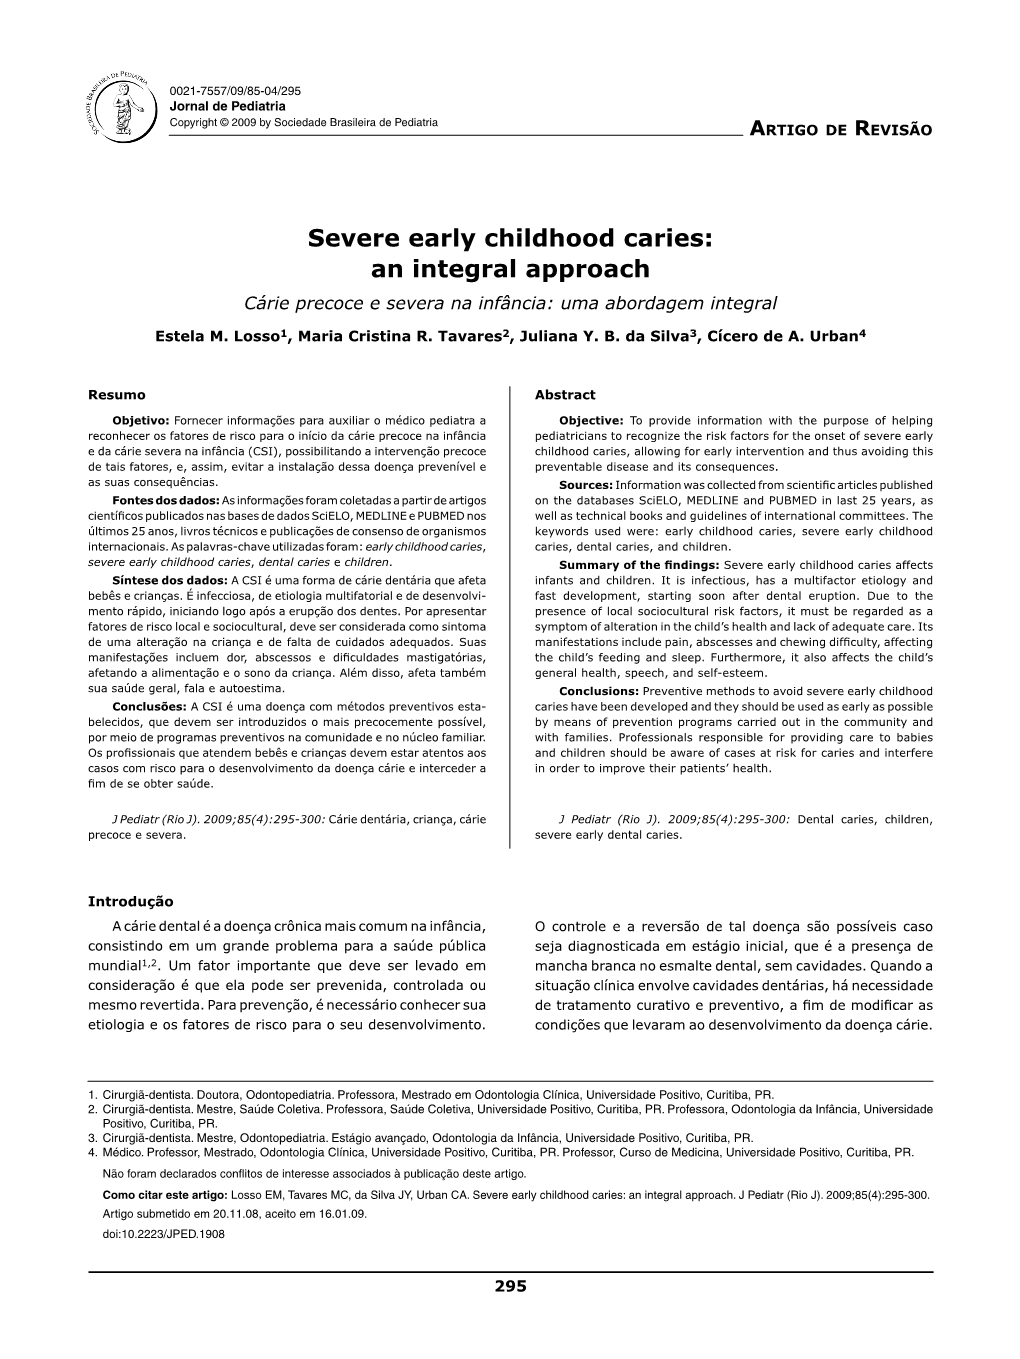 Severe Early Childhood Caries: an Integral Approach Cárie Precoce E Severa Na Infância: Uma Abordagem Integral